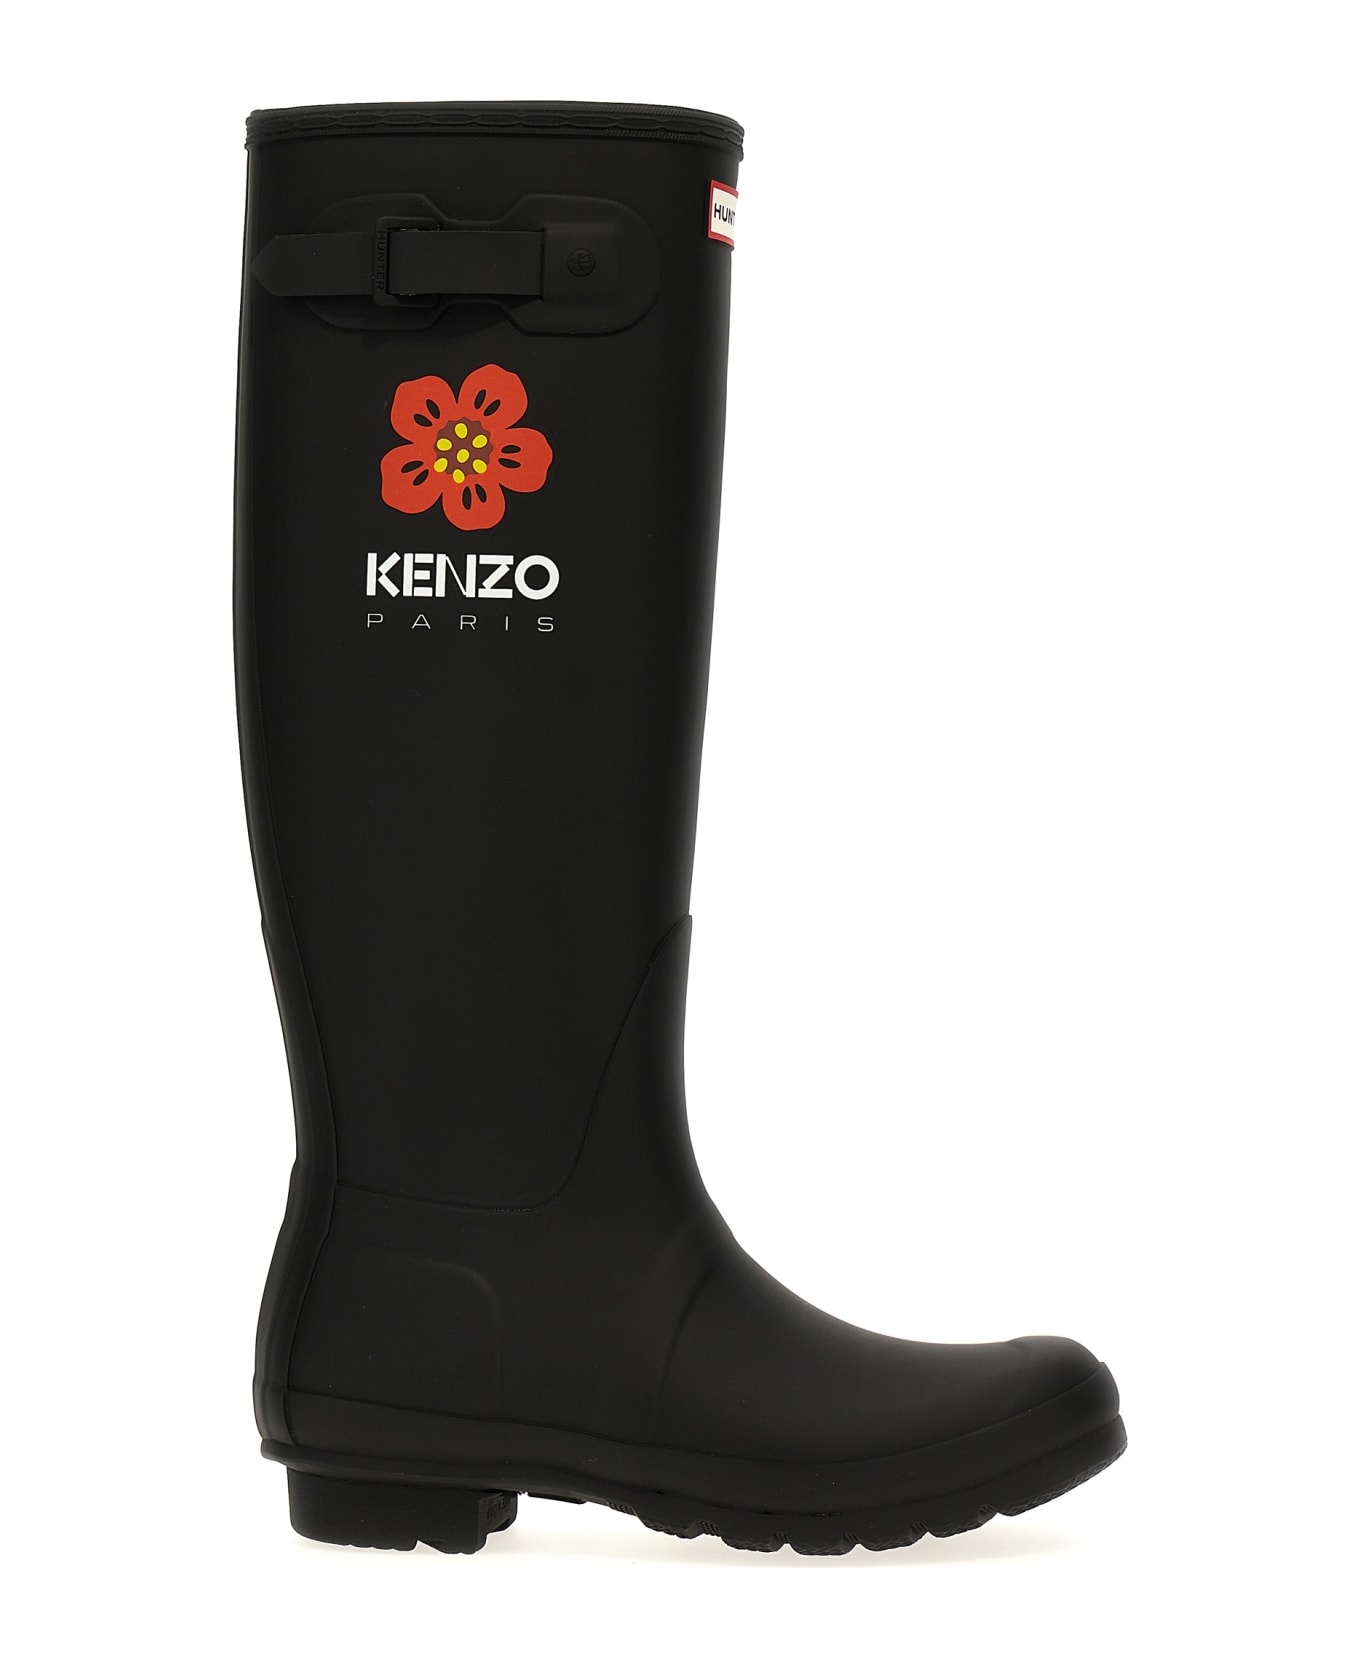 Kenzo X Hunter Wellington Boots - Noir ブーツ